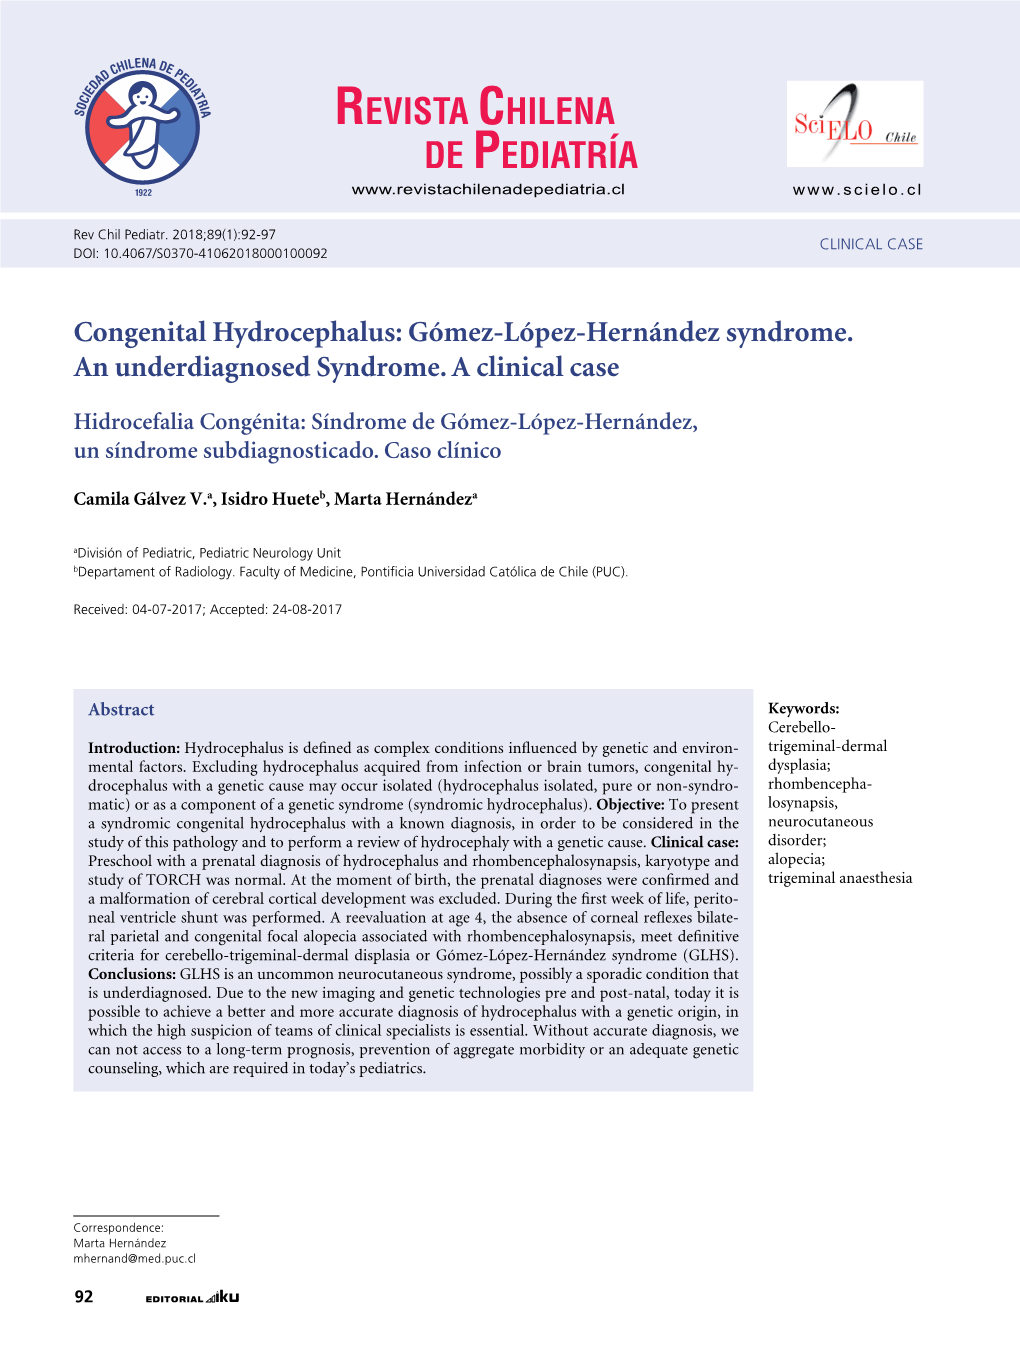 Congenital Hydrocephalus: Gómez-López-Hernández Syndrome. an Underdiagnosed Syndrome. a Clinical Case